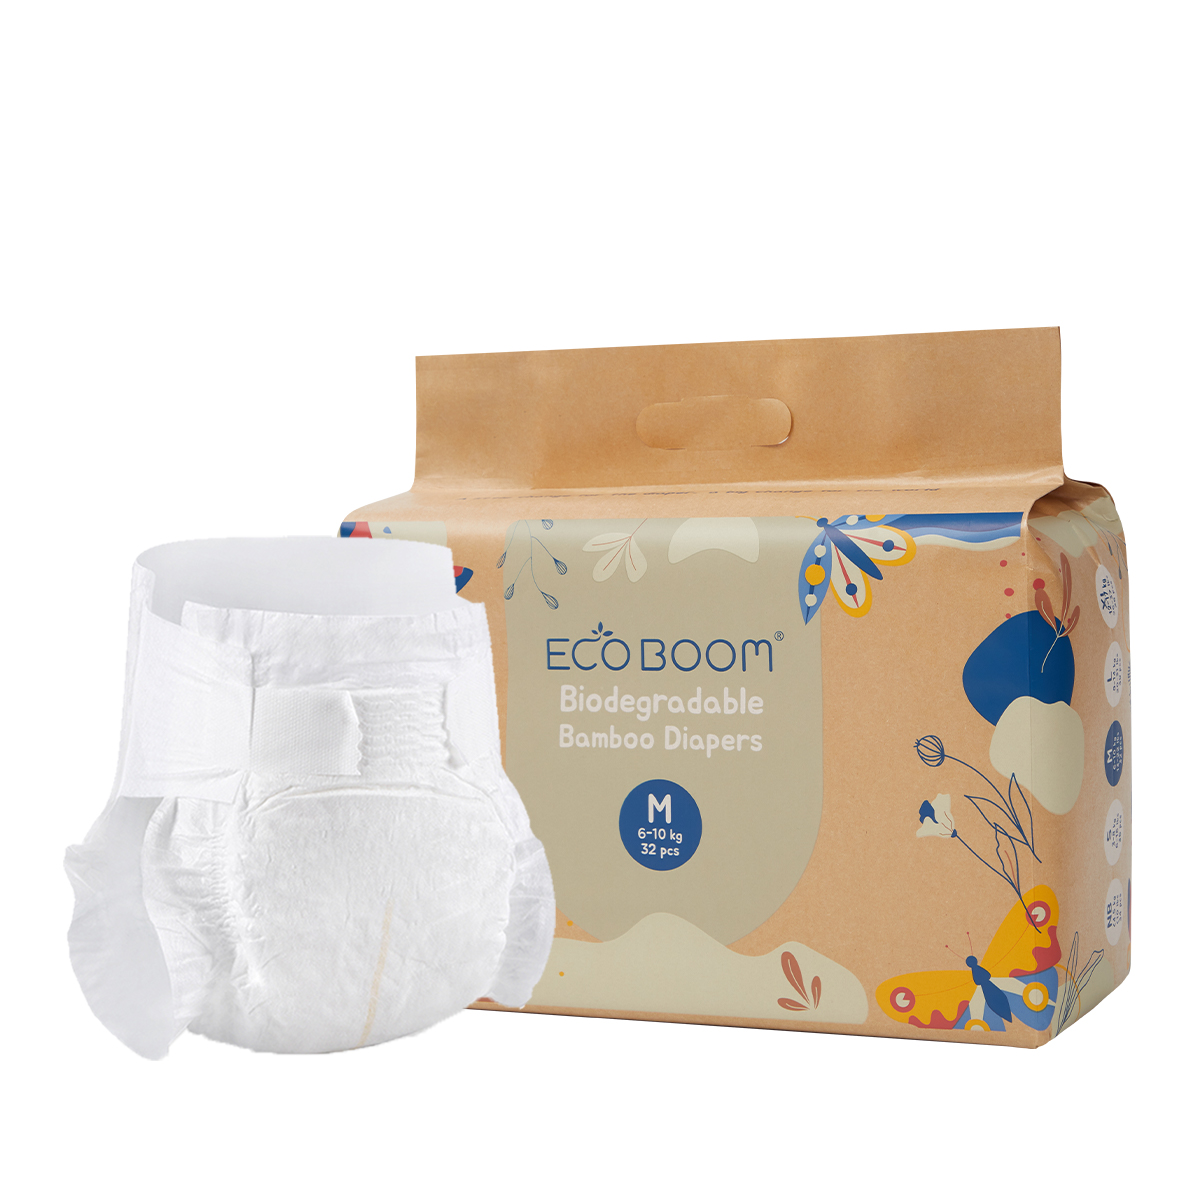 ECO BOOM bamboo cloth diaper distribution-2